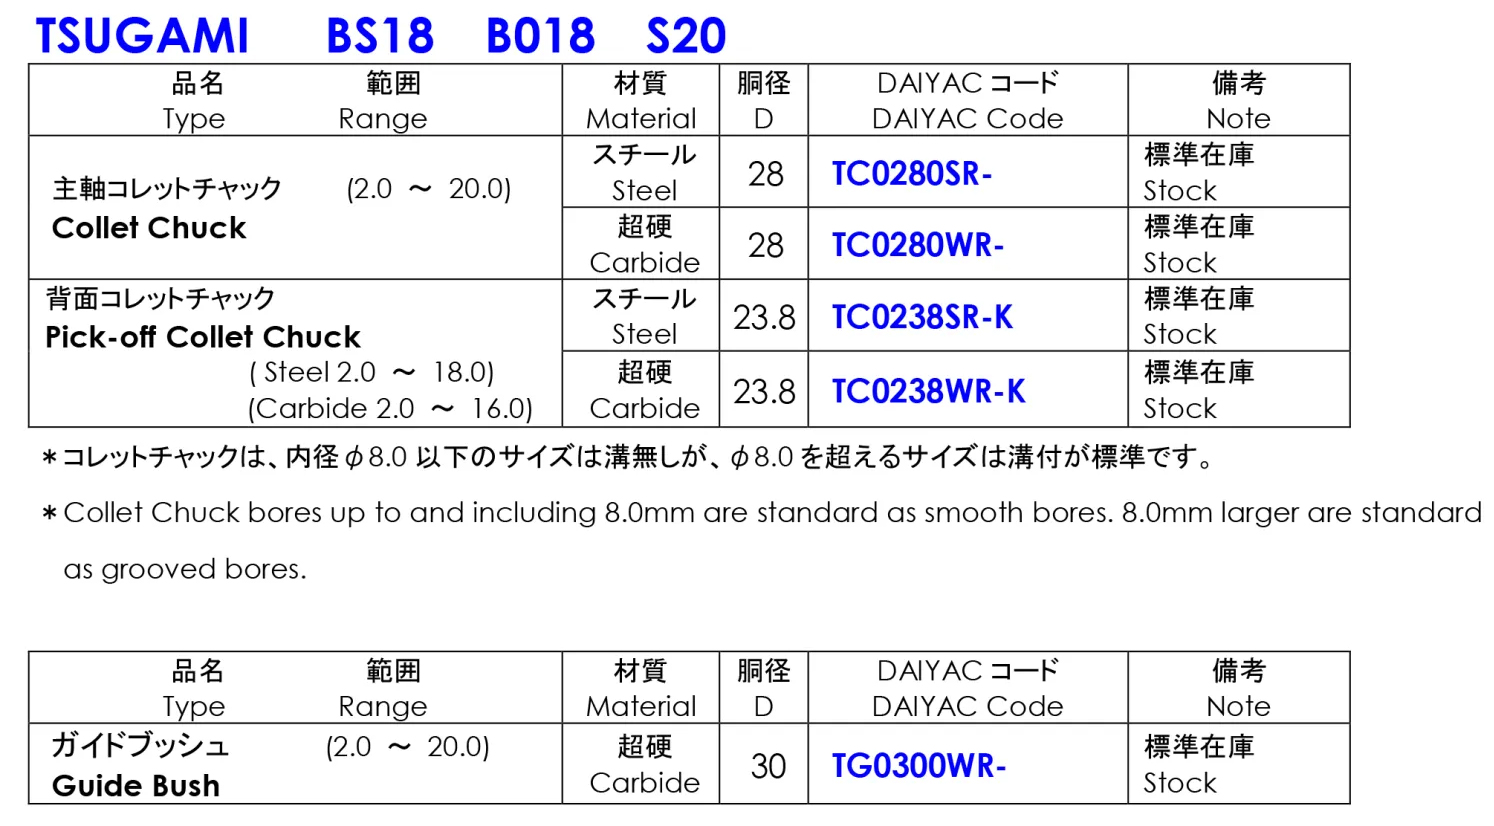 Guide Bush Daiyac Lắp Máy Tsugami BS18-B018-S20 1